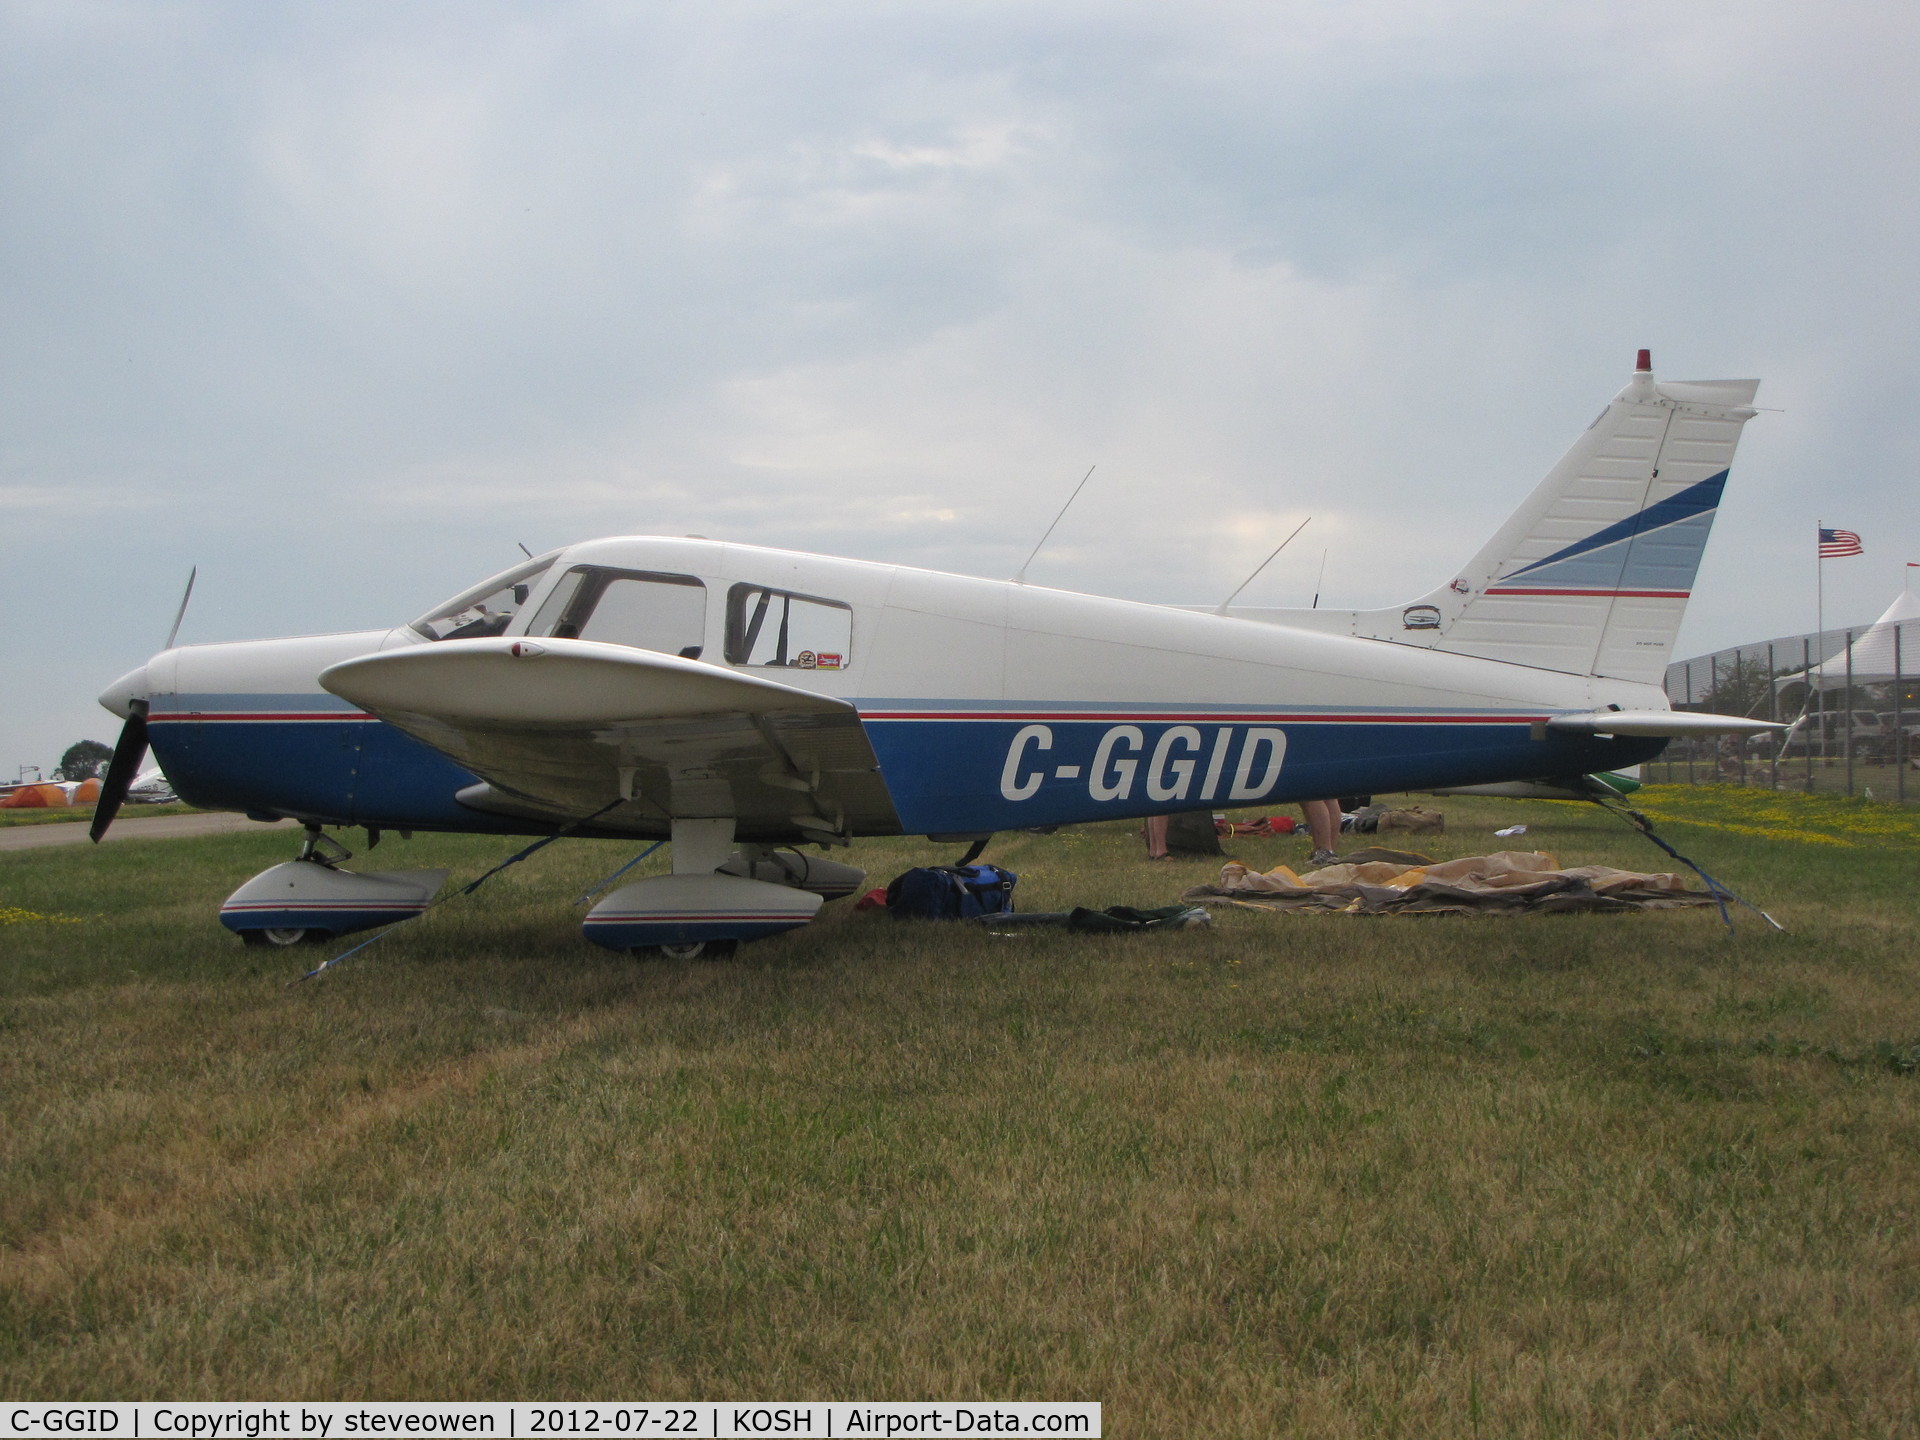 C-GGID, 1975 Piper PA-28-140 Cruiser C/N 28-7525302, Camping at Oshkosh